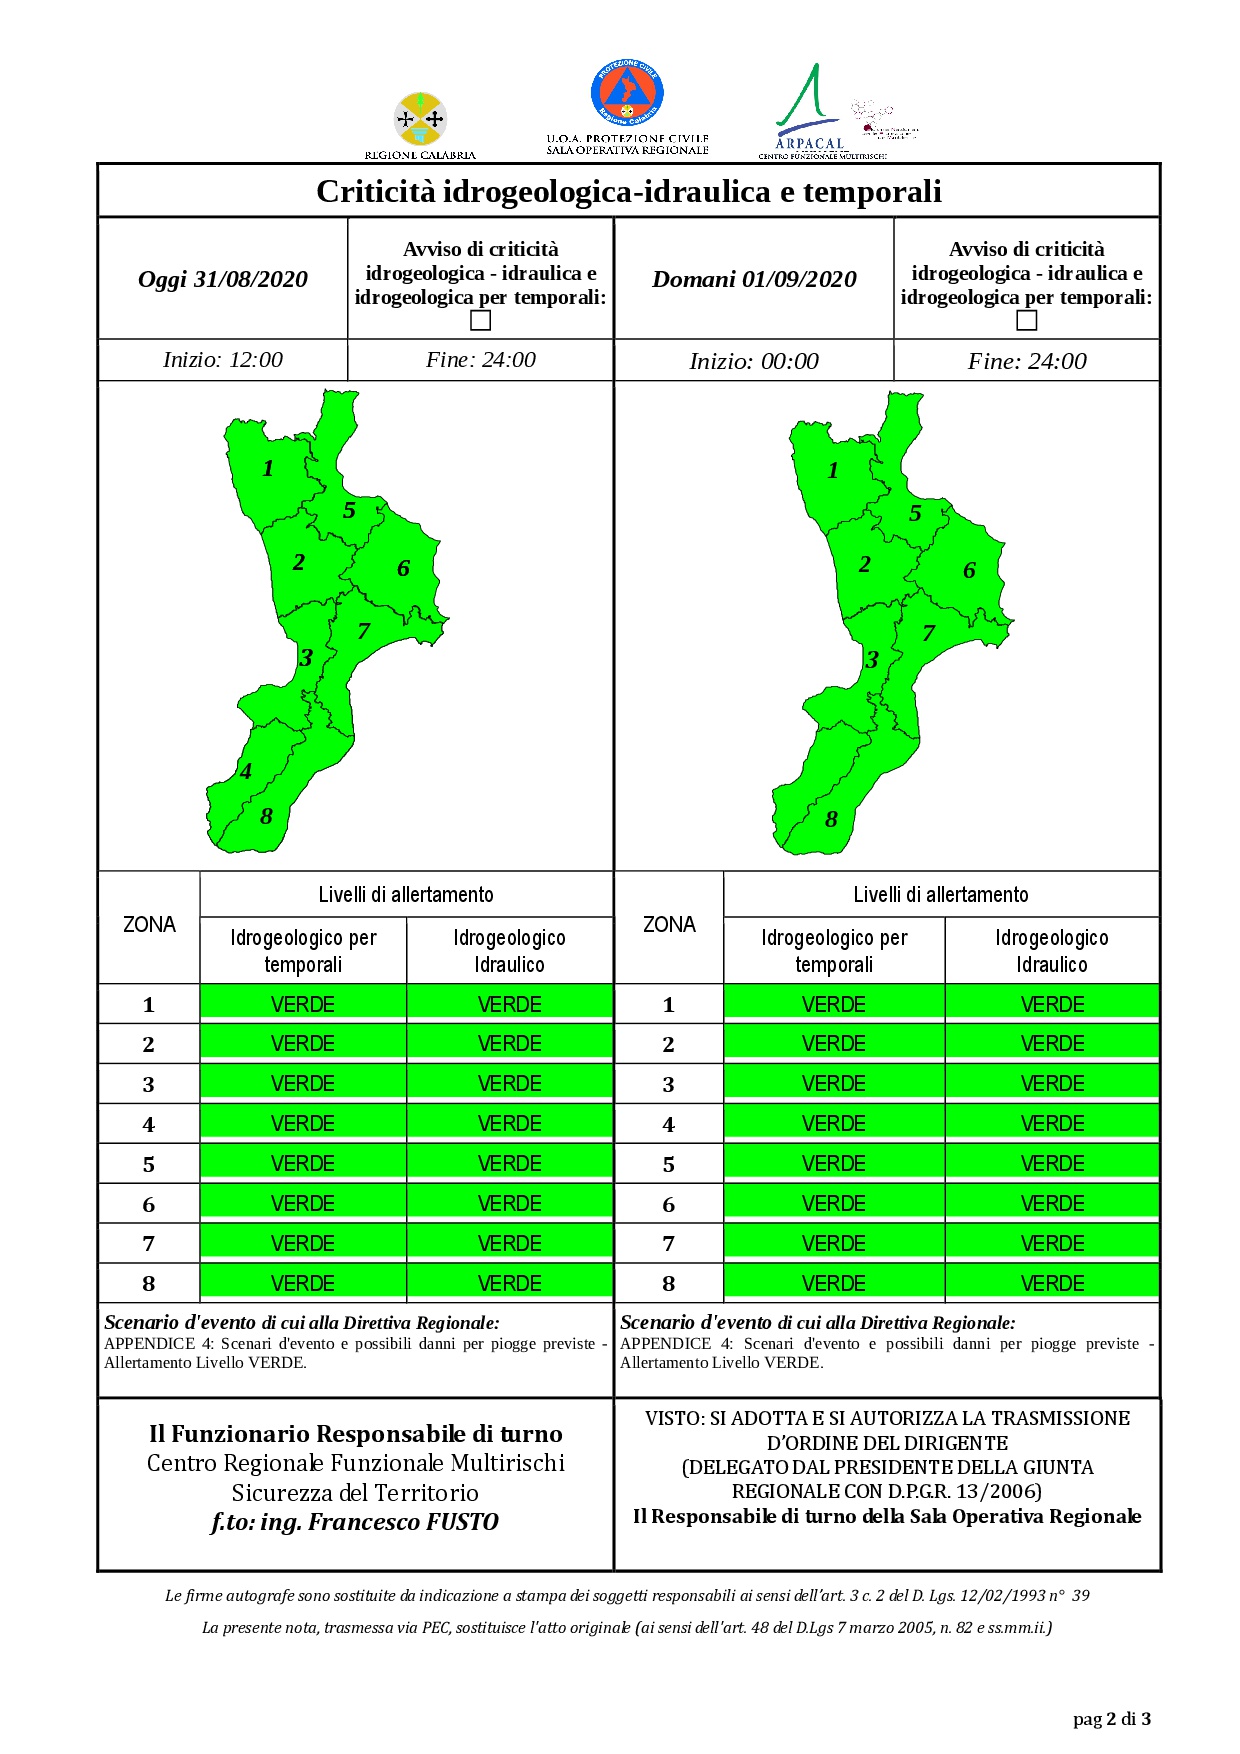 Criticità idrogeologica-idraulica e temporali in Calabria 31-08-2020